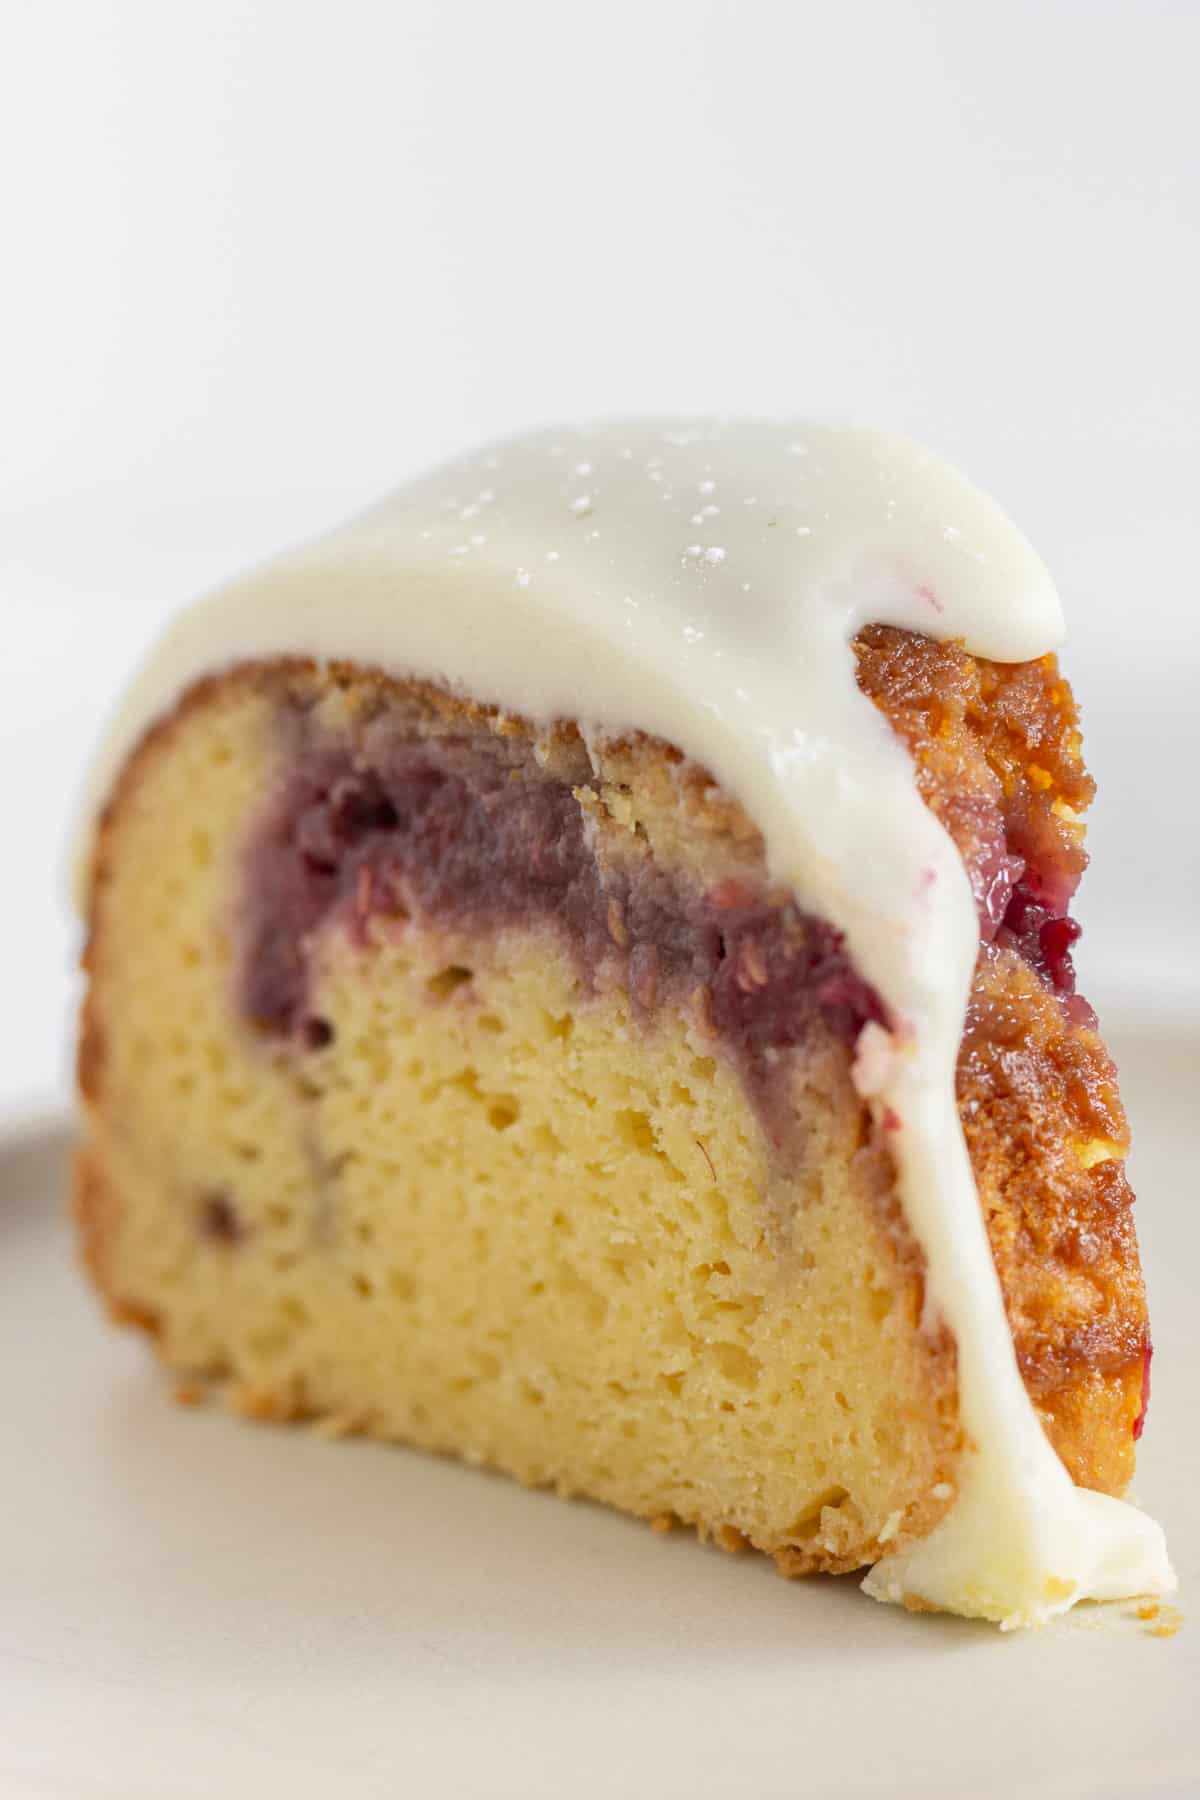 A slice of raspberry cake with white chocolate ganache.